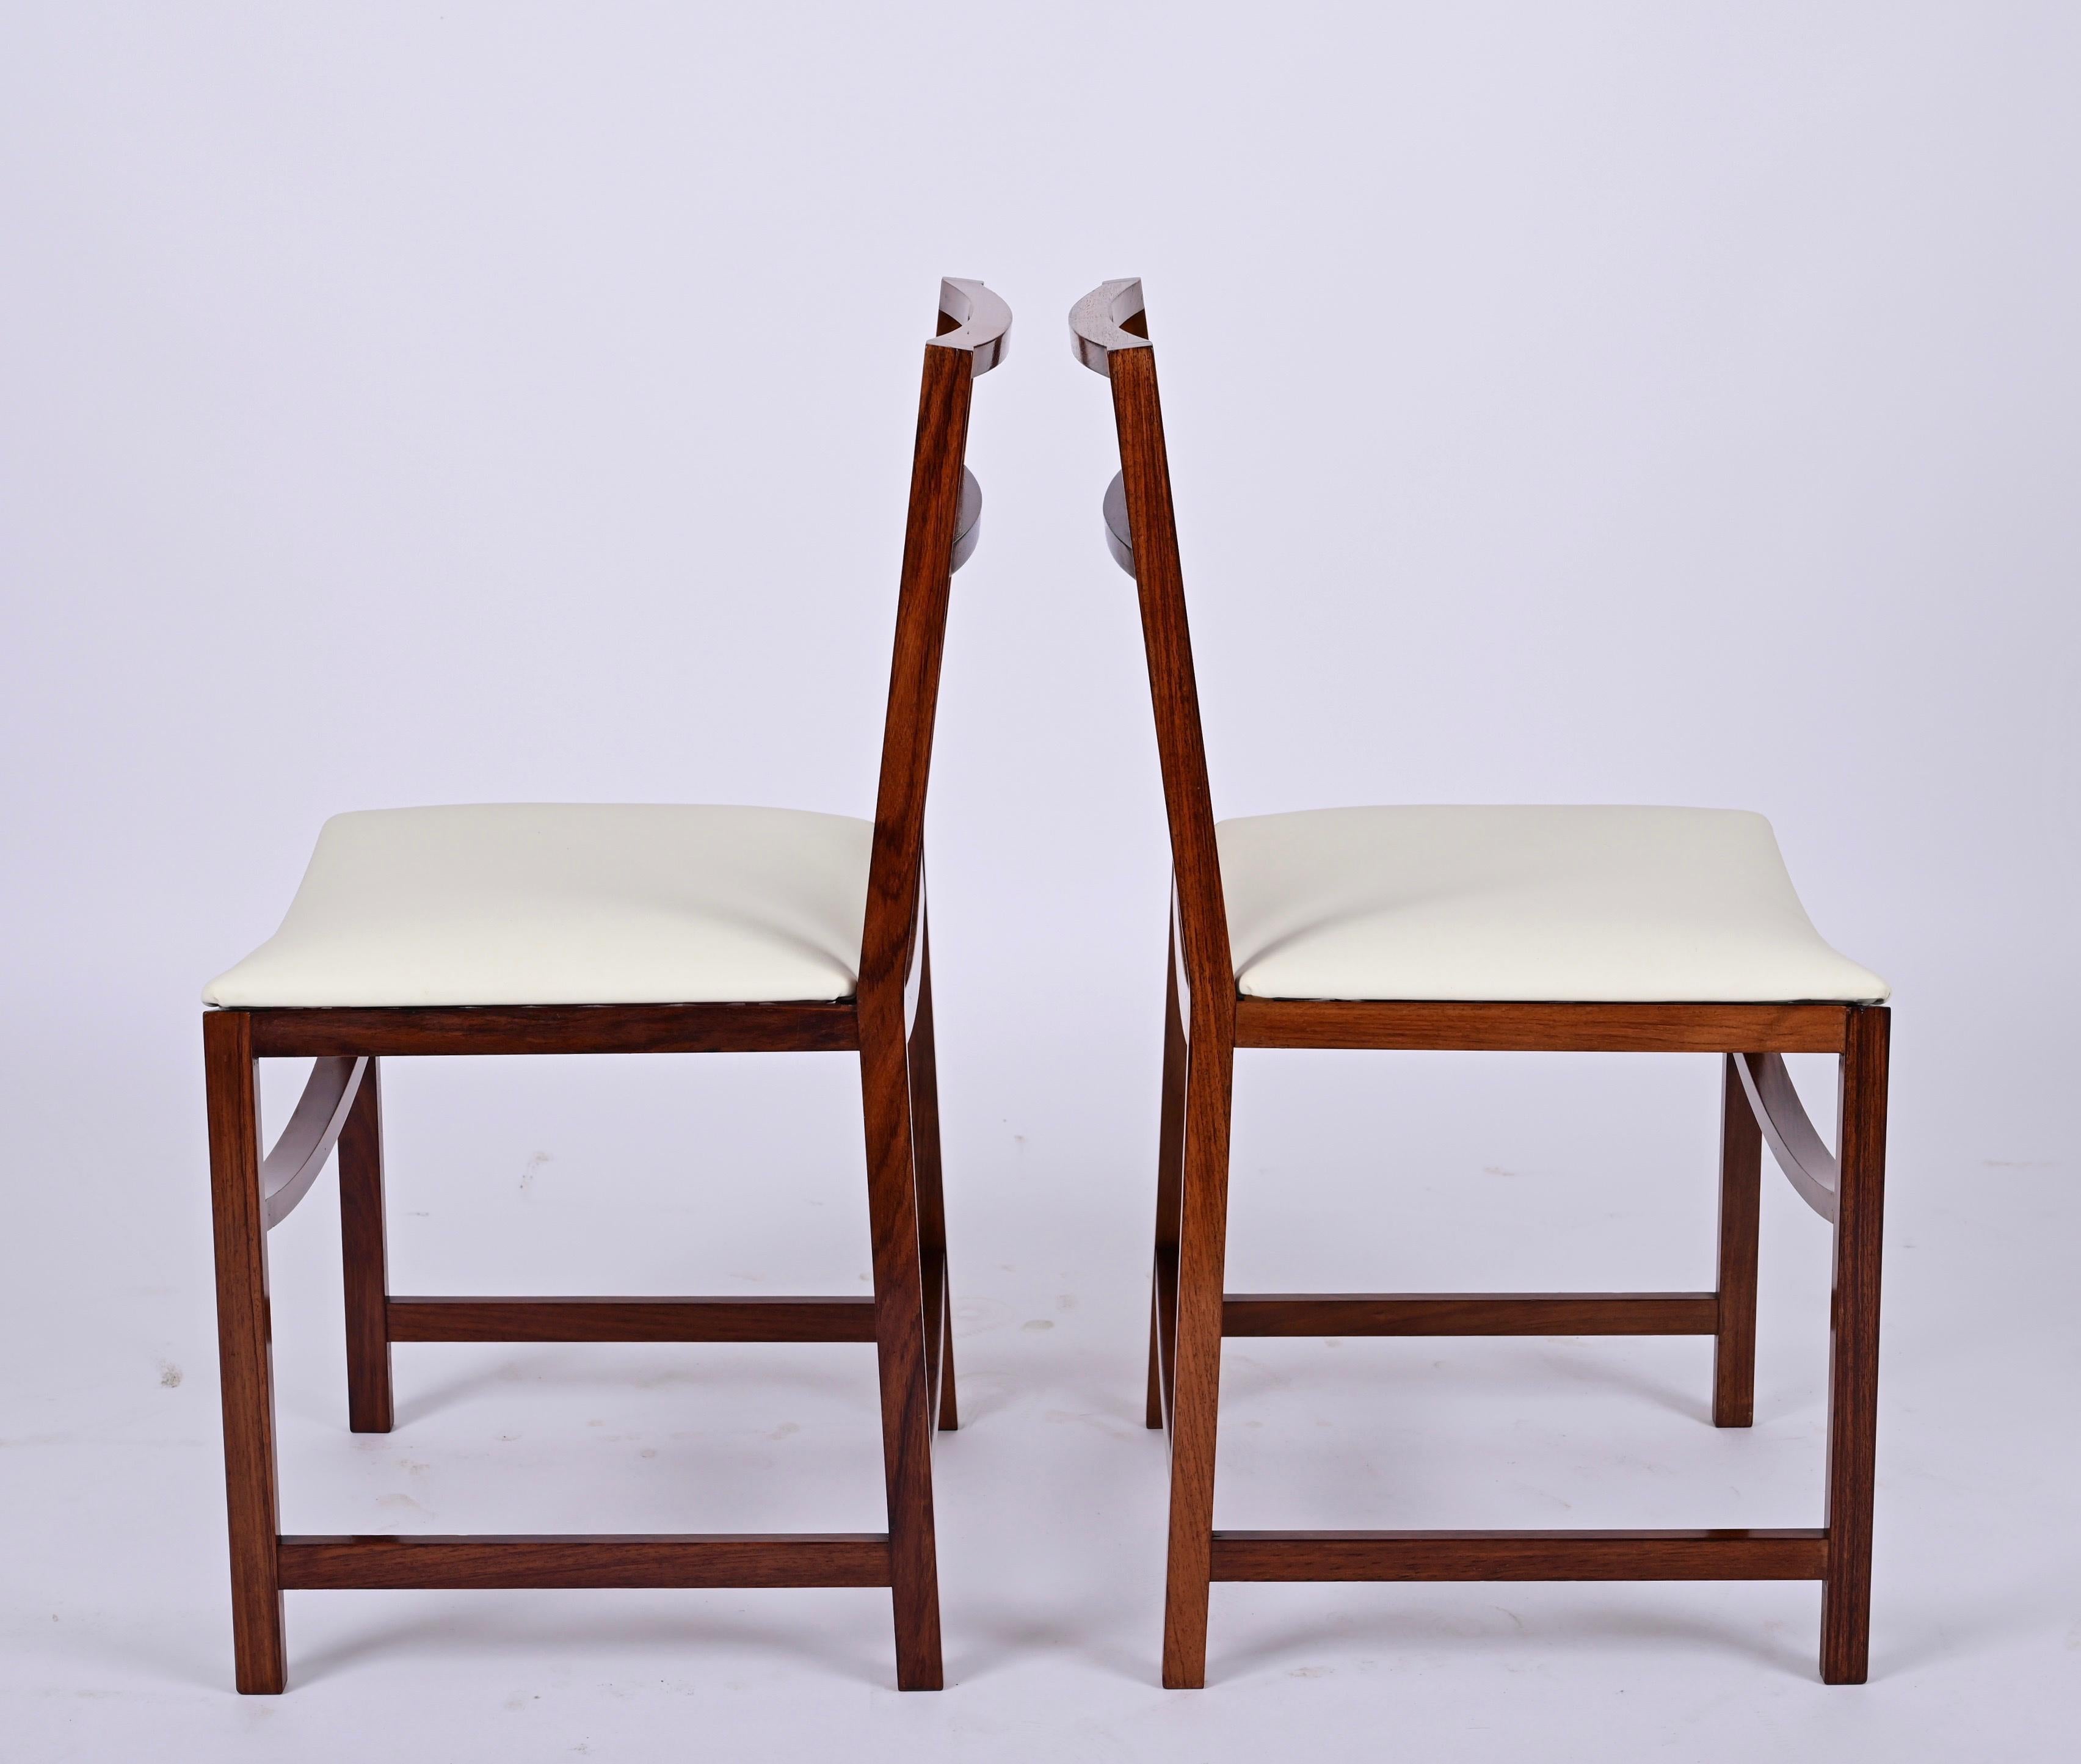 Midcentury Italian Dining Chairs in Teak, Renato Venturi for MIM Roma, 1960s For Sale 1